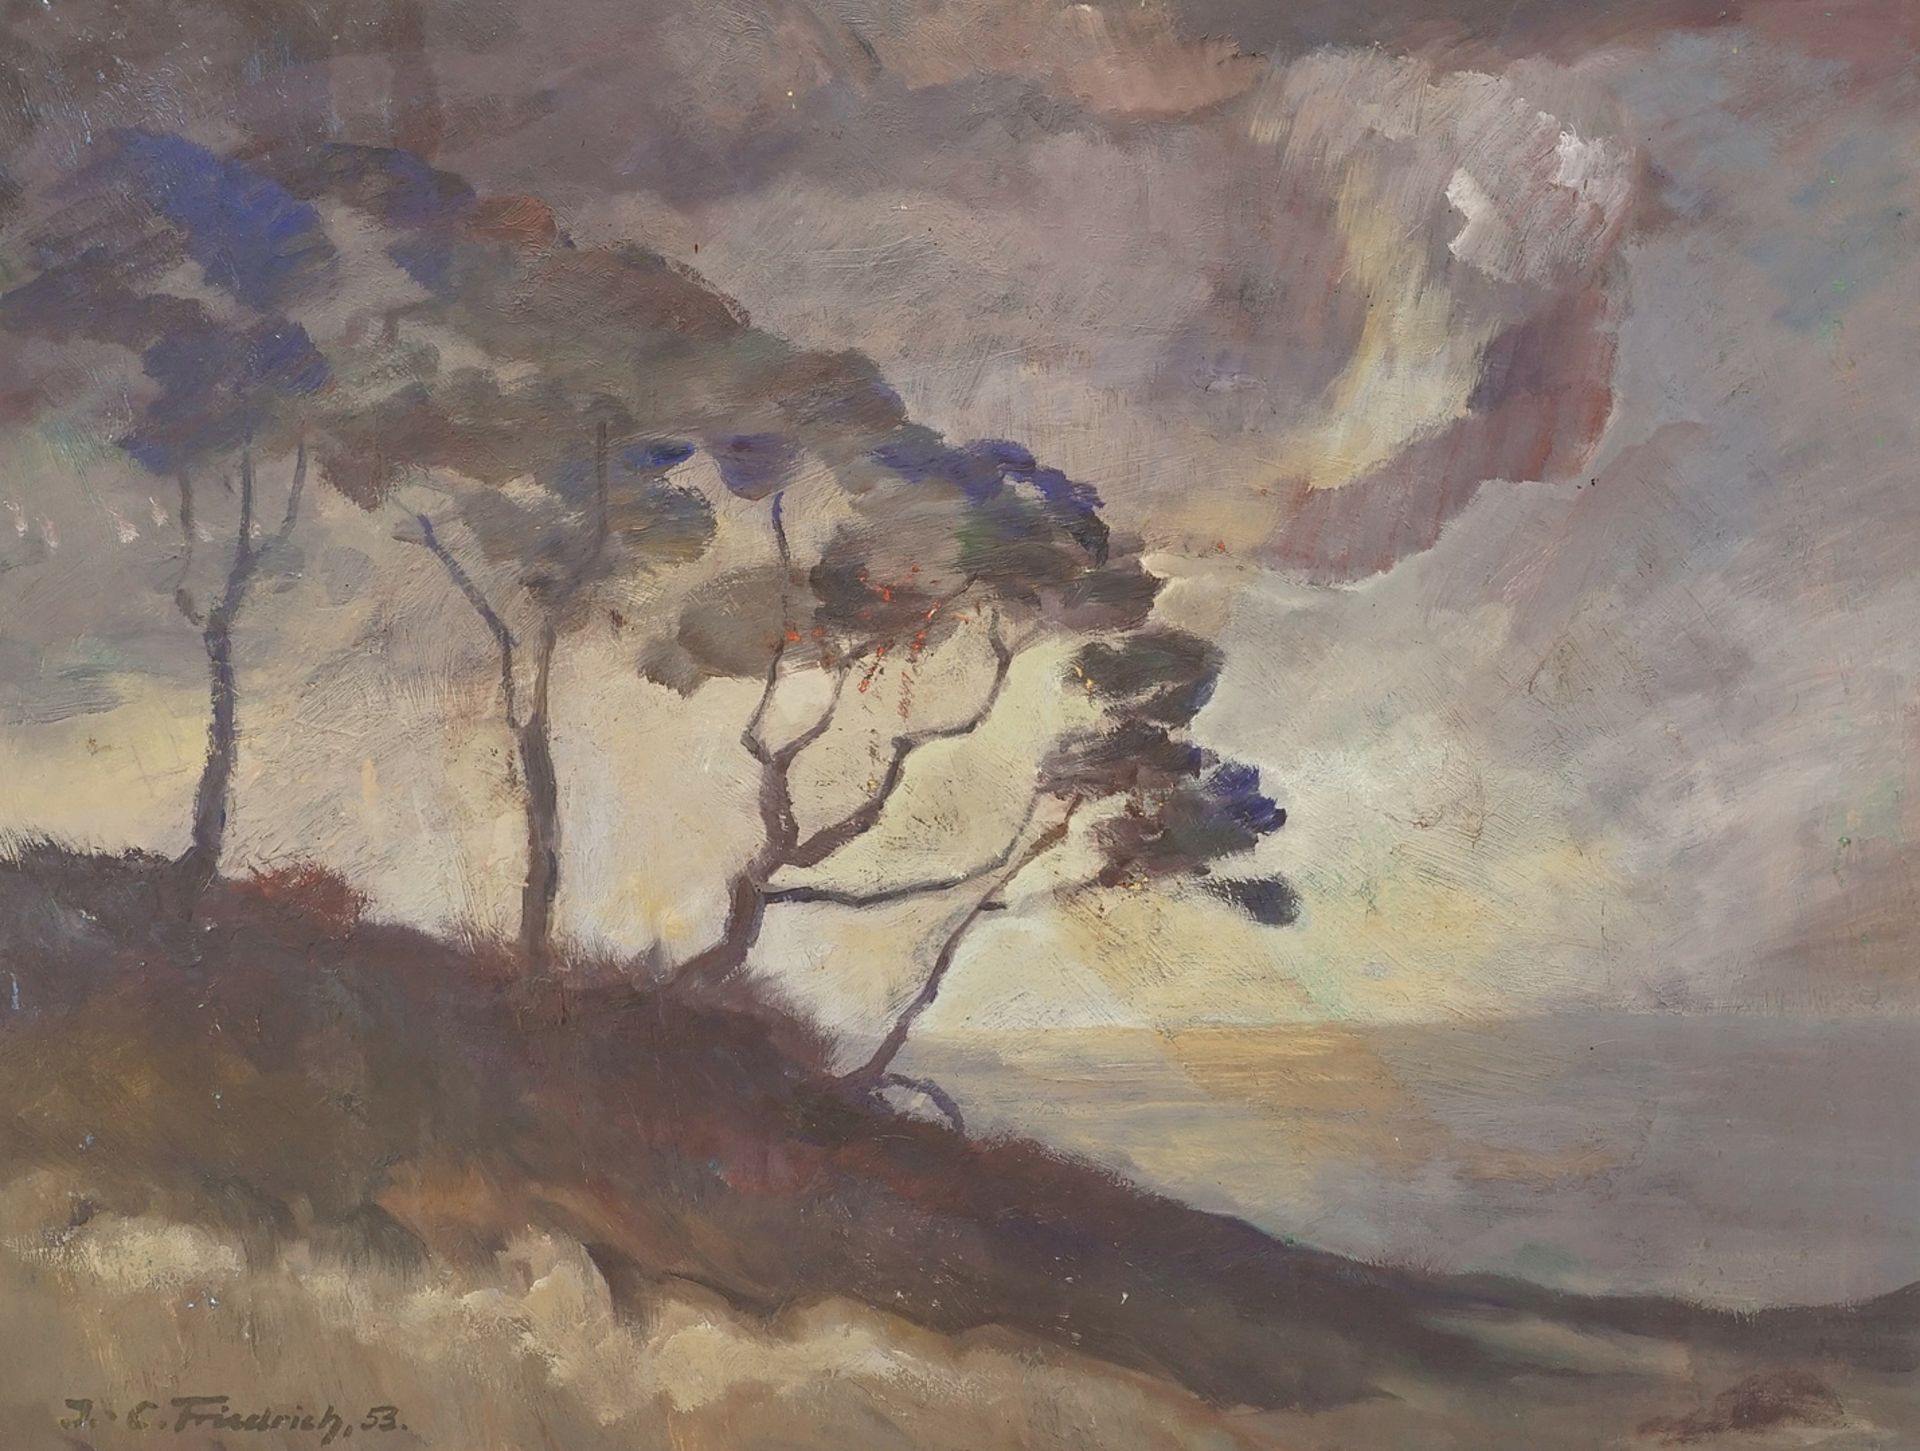 J.C. Friedrich, Stormy landscape